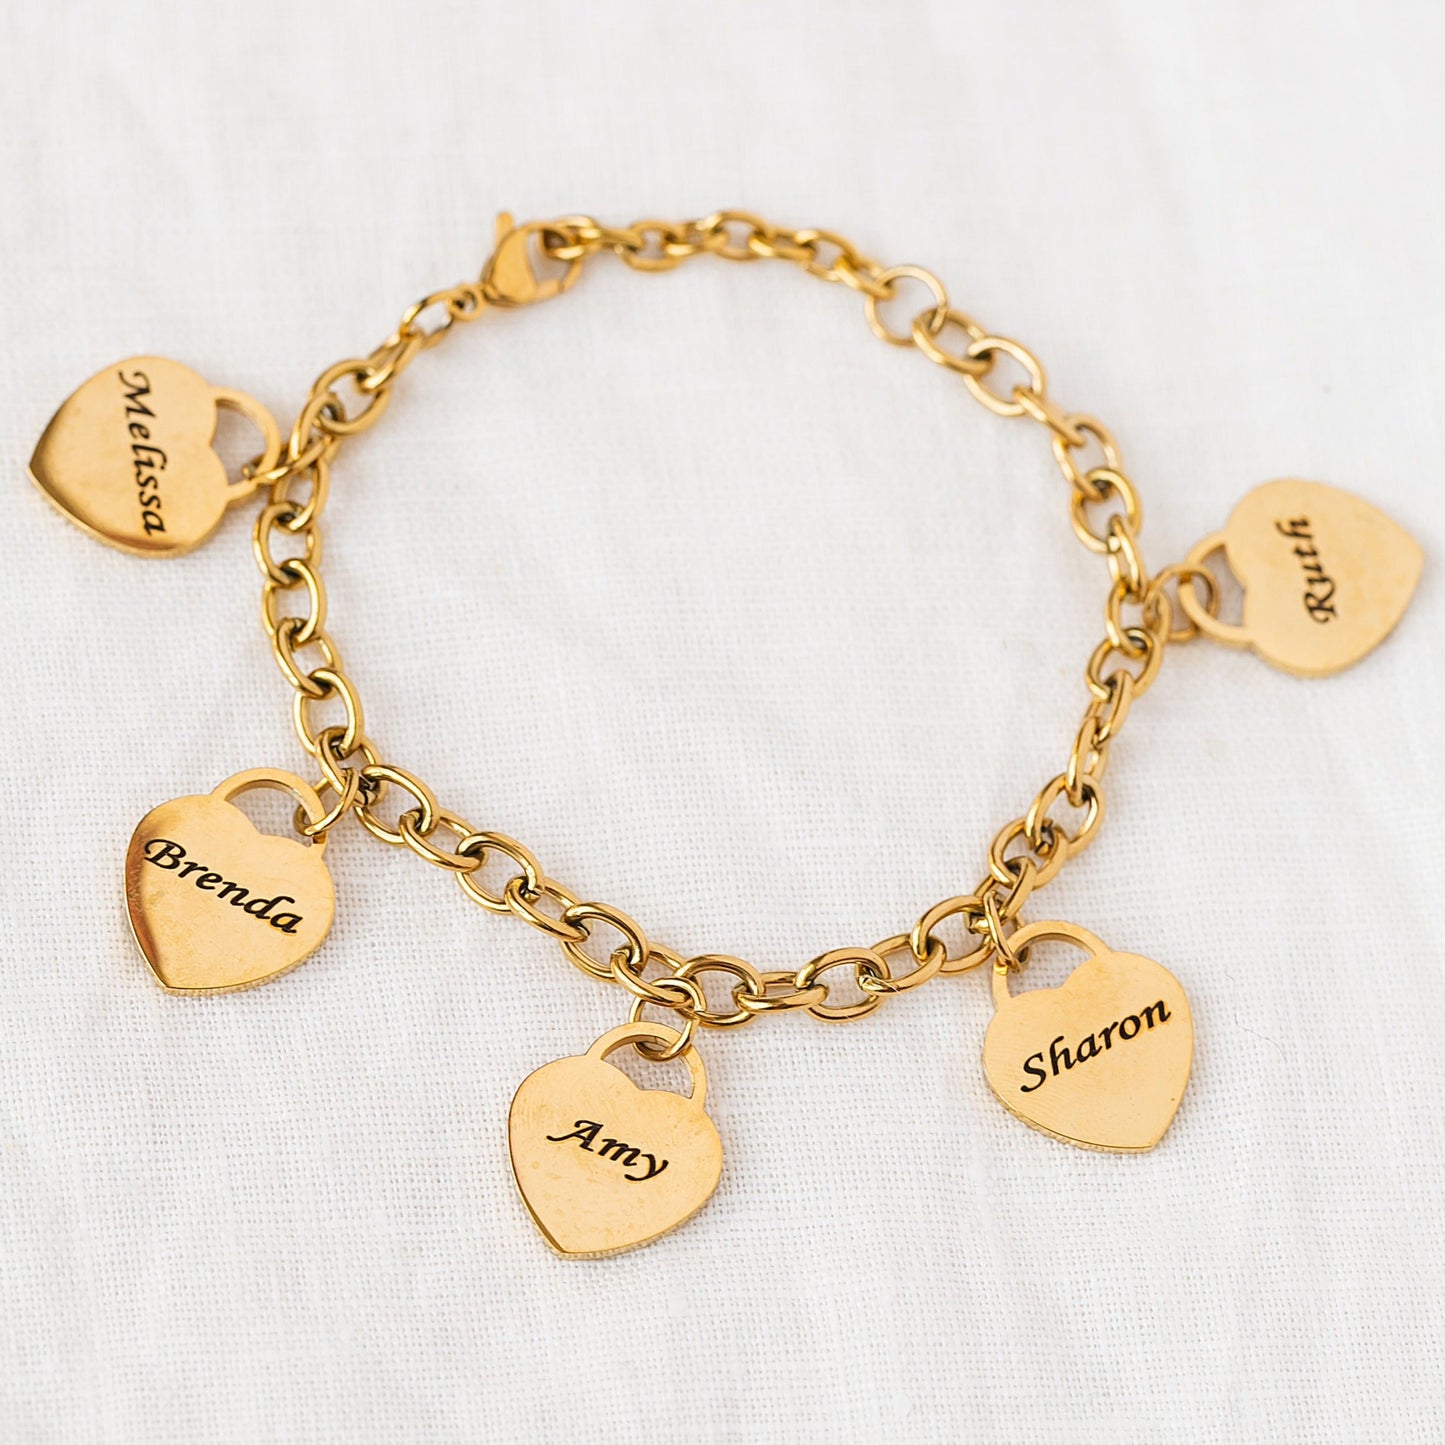 Personalized heart engraved bracelet